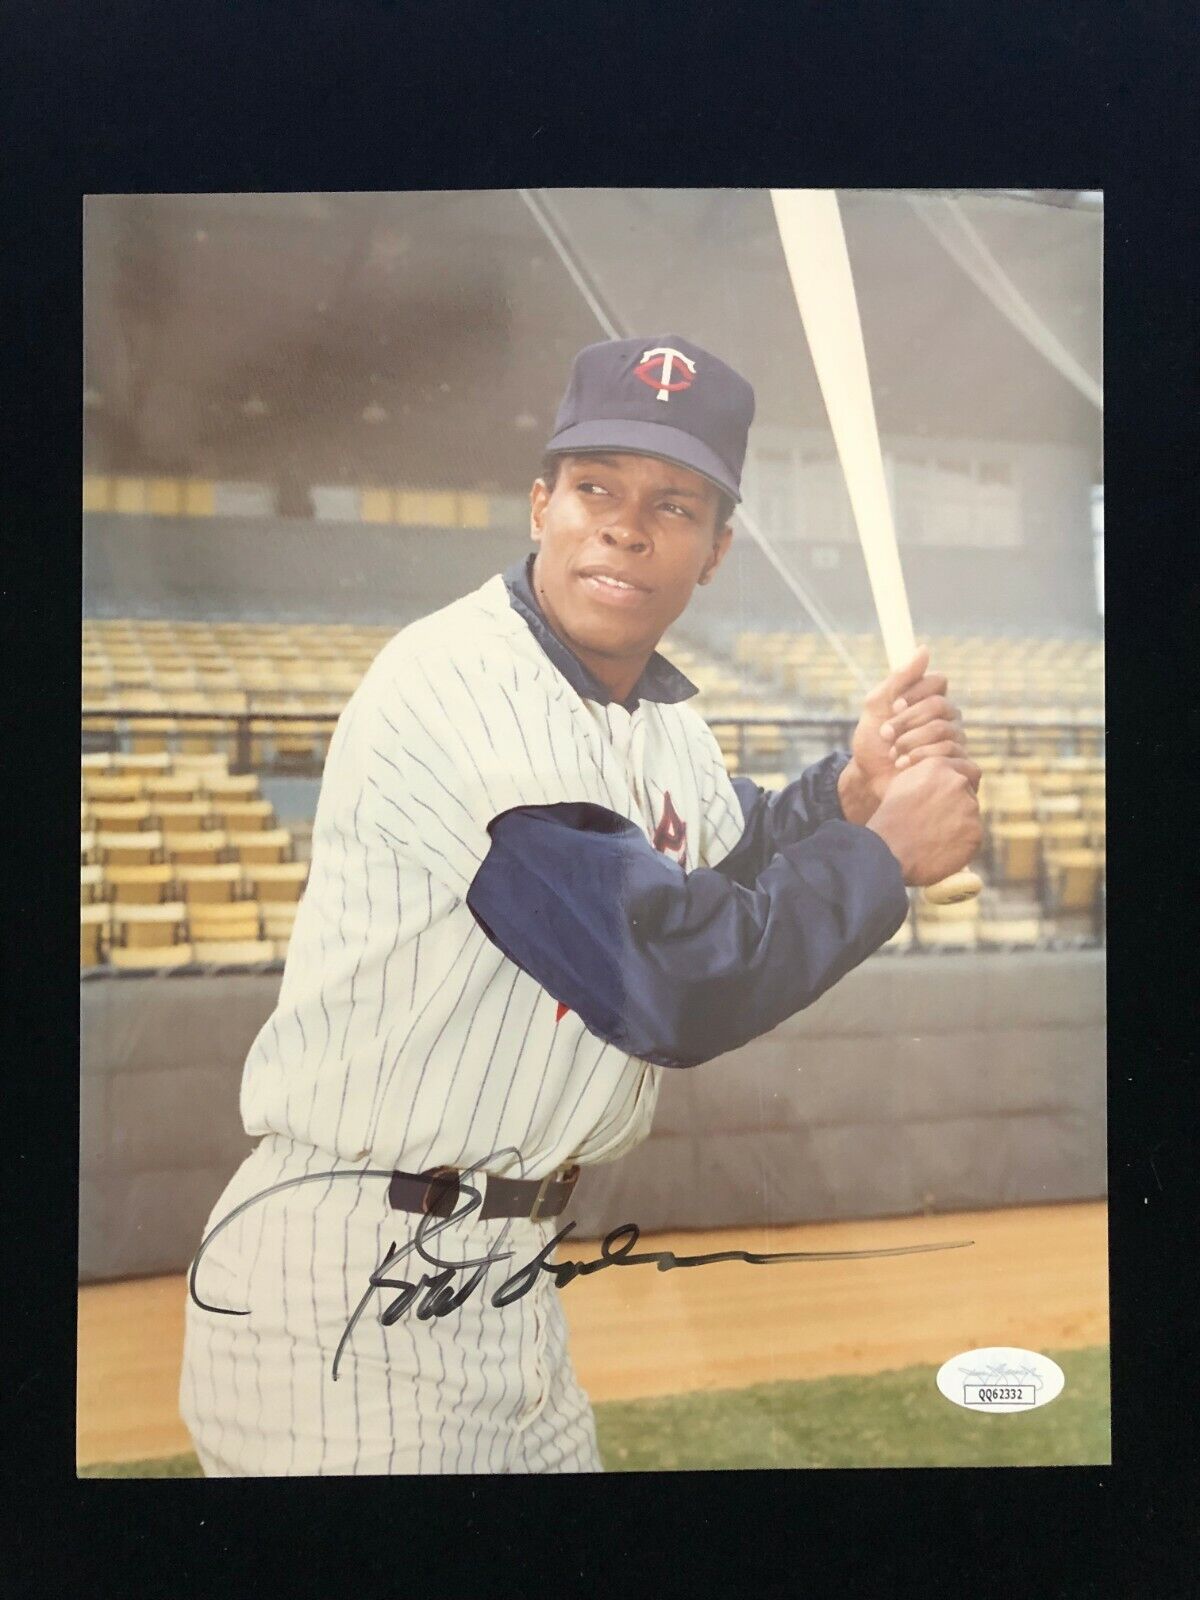 Rod Carew Signed Autographed Photo Poster painting Minnesota Twins MLB - JSA #MM63332